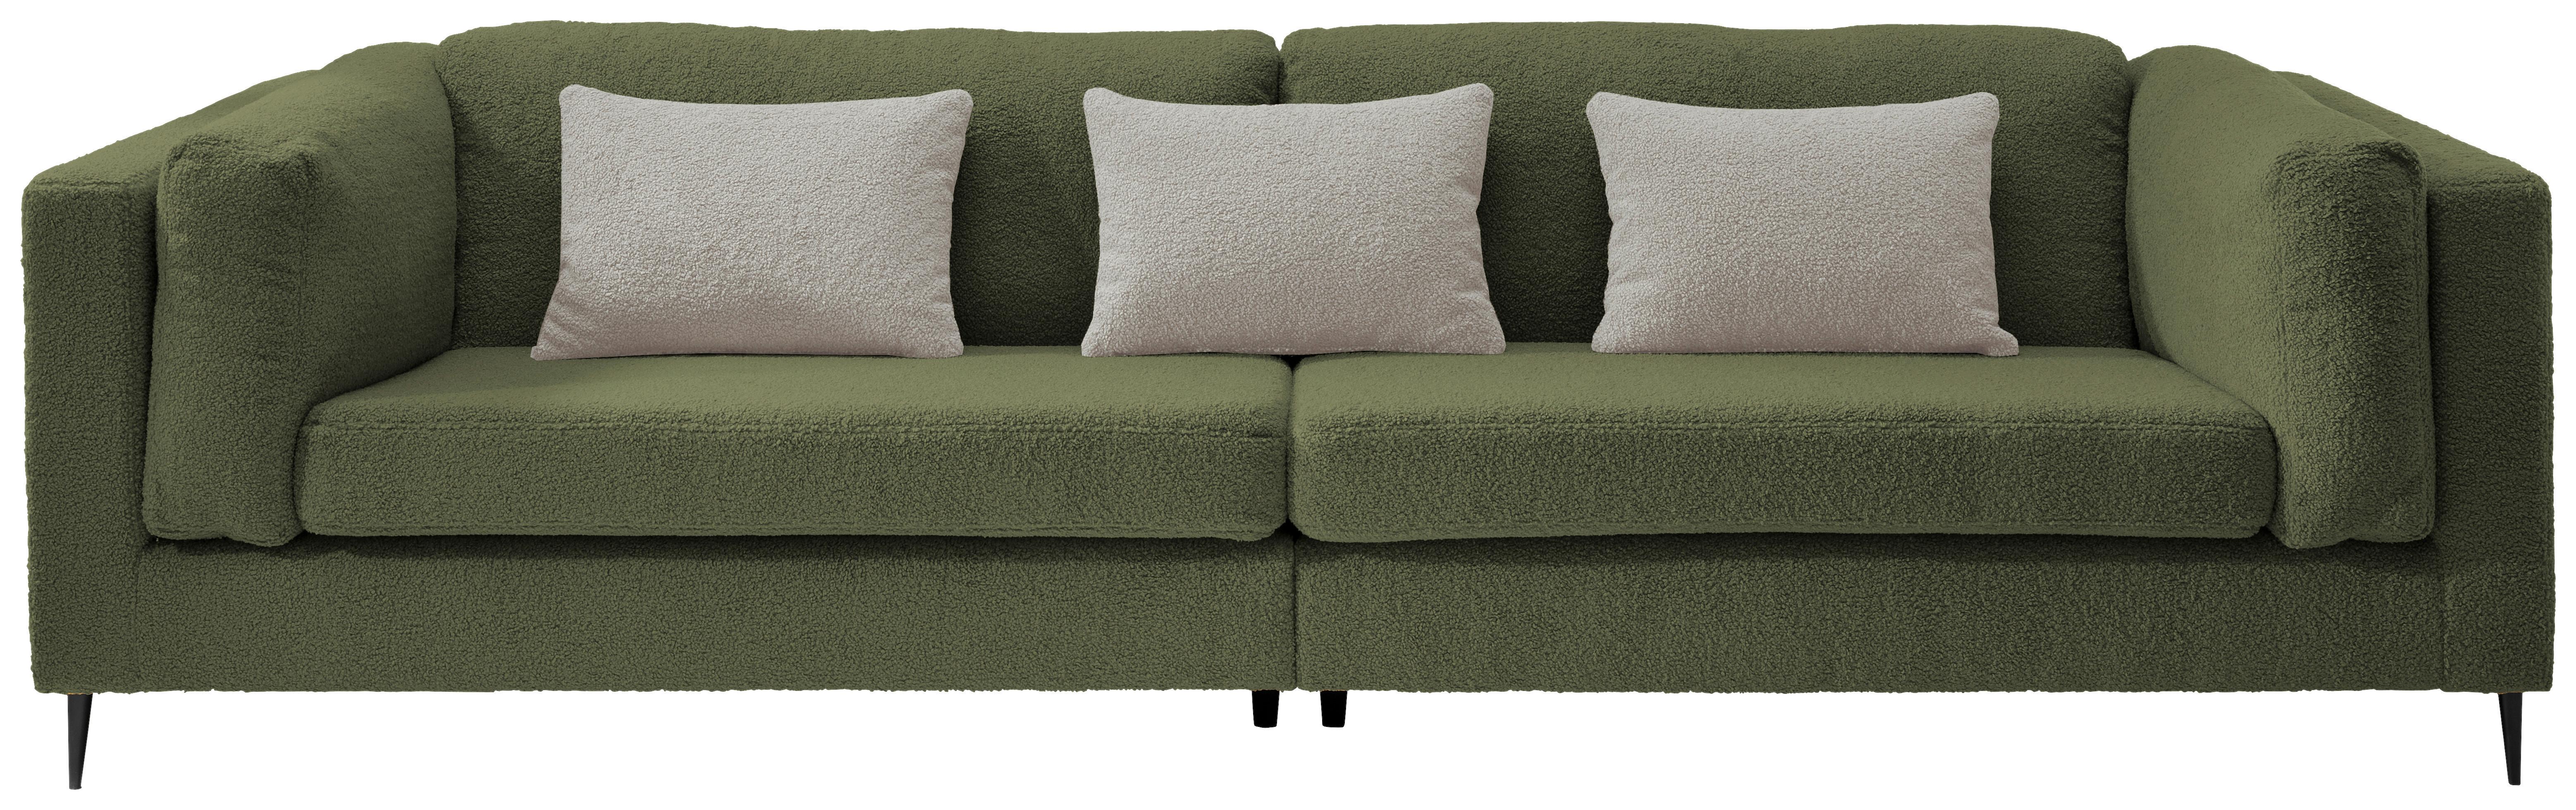 4-Sitzer-Sofa Roma Dunkelgrün Teddystoff - Dunkelgrün/Silberfarben, Design, Holz/Textil (306/83/113cm) - Livetastic